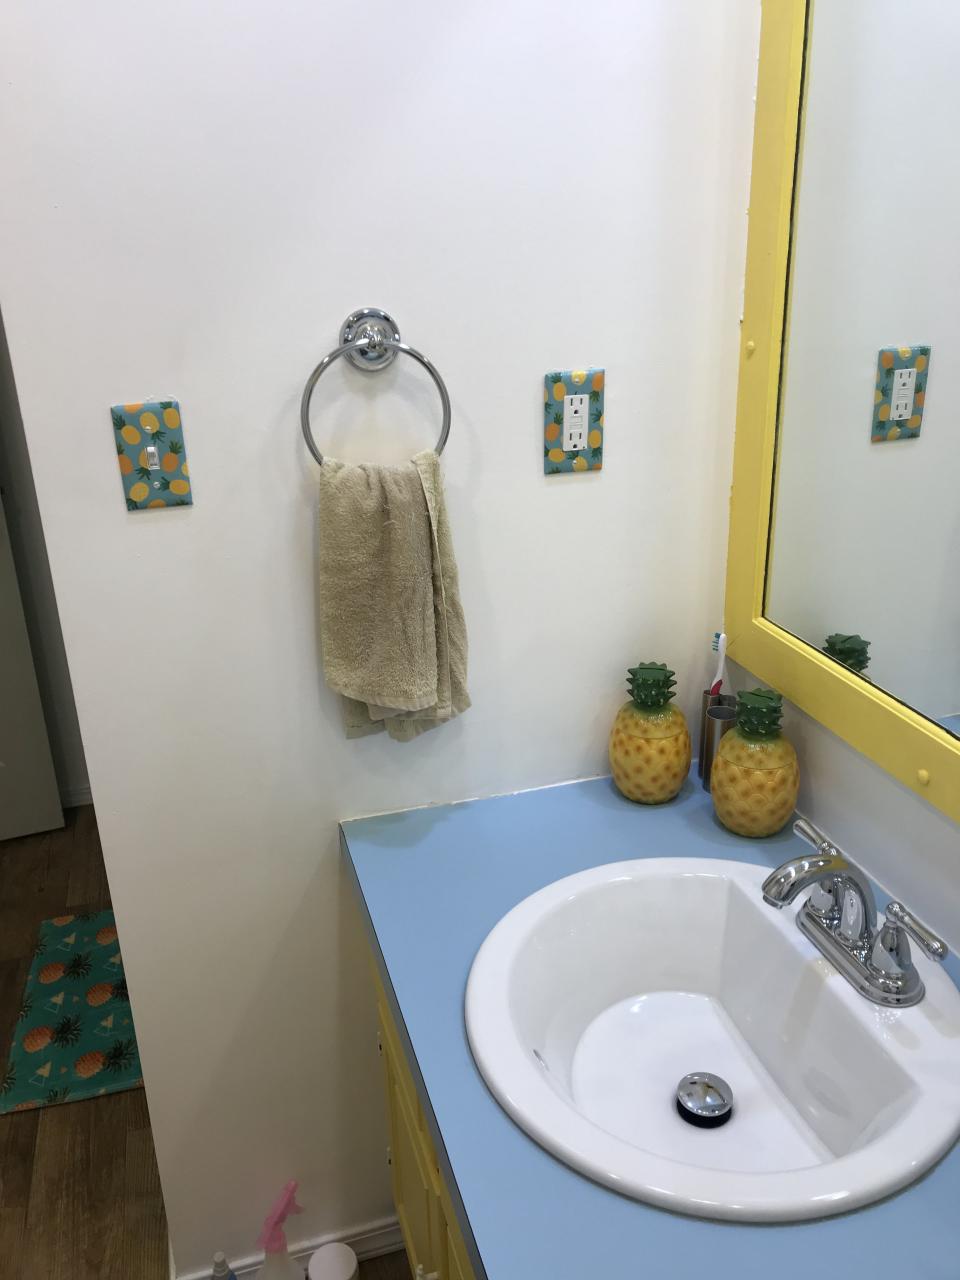 Pin by Ann Butler on Pineapple bathroom decor Pineapple bathroom